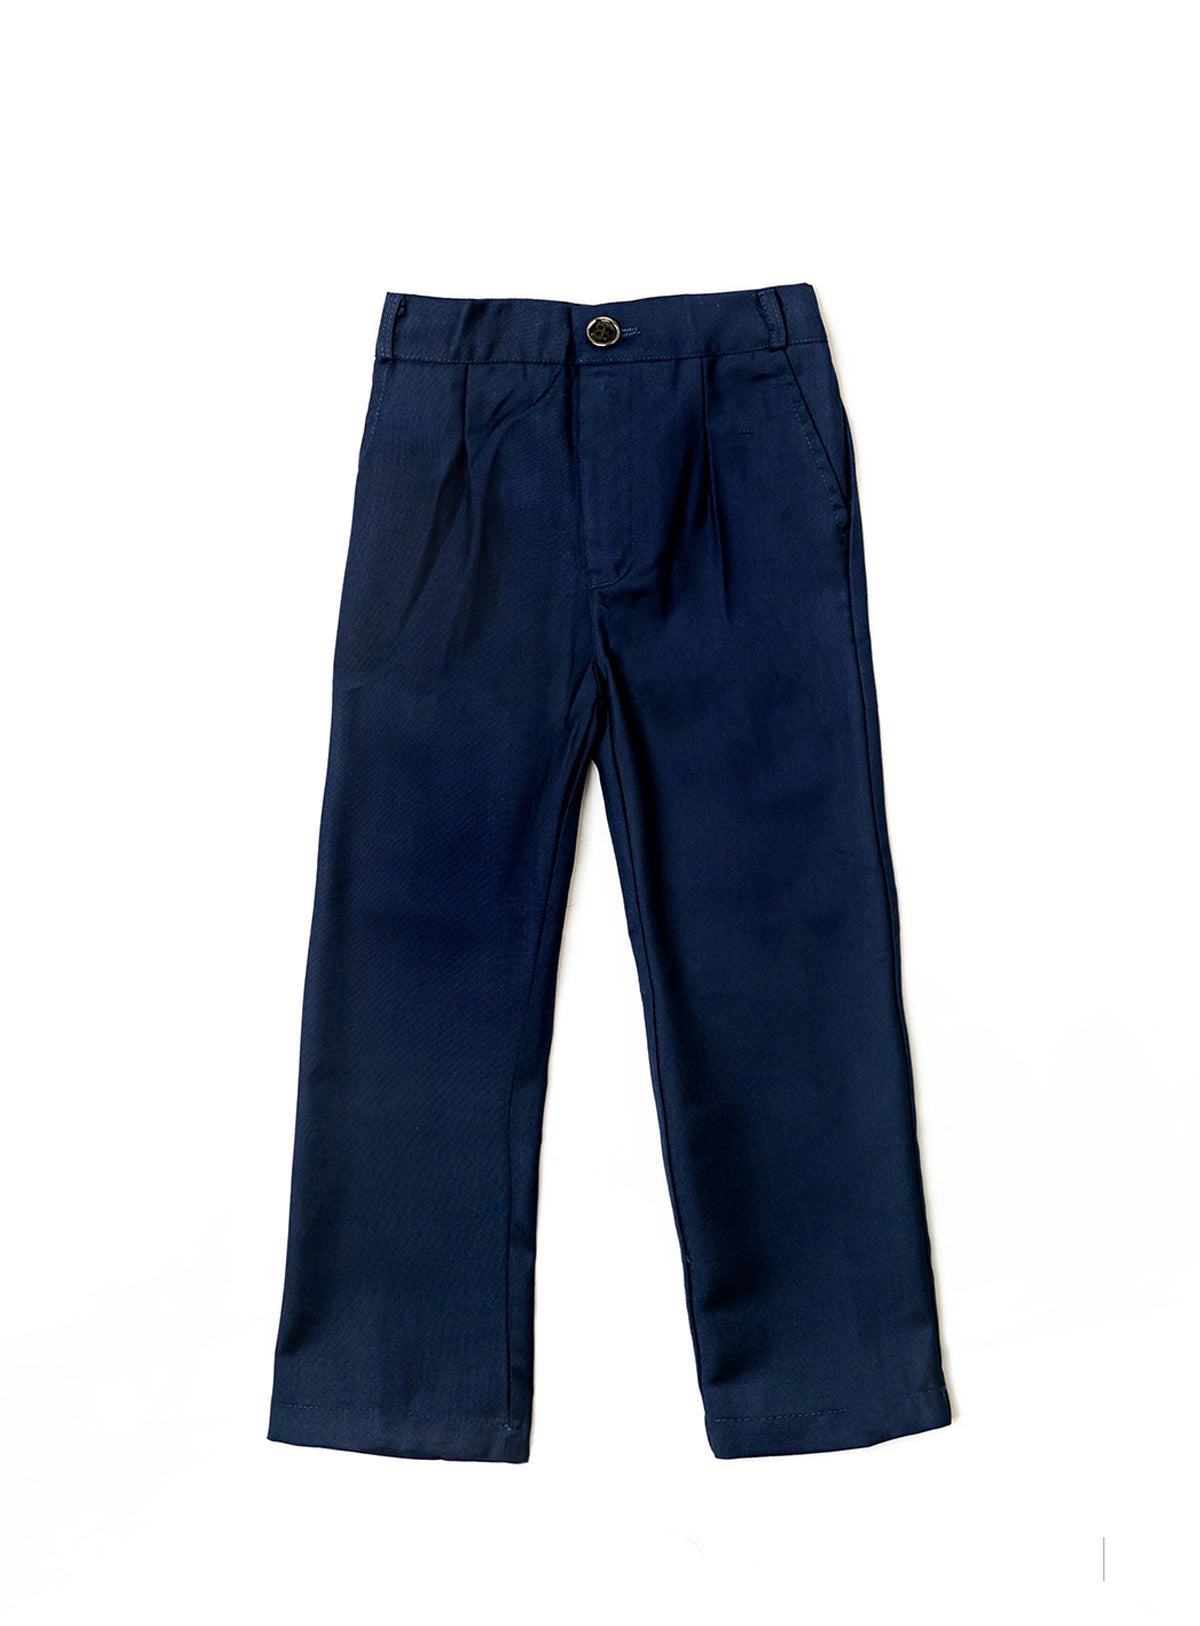 indigo blue straight cut pants